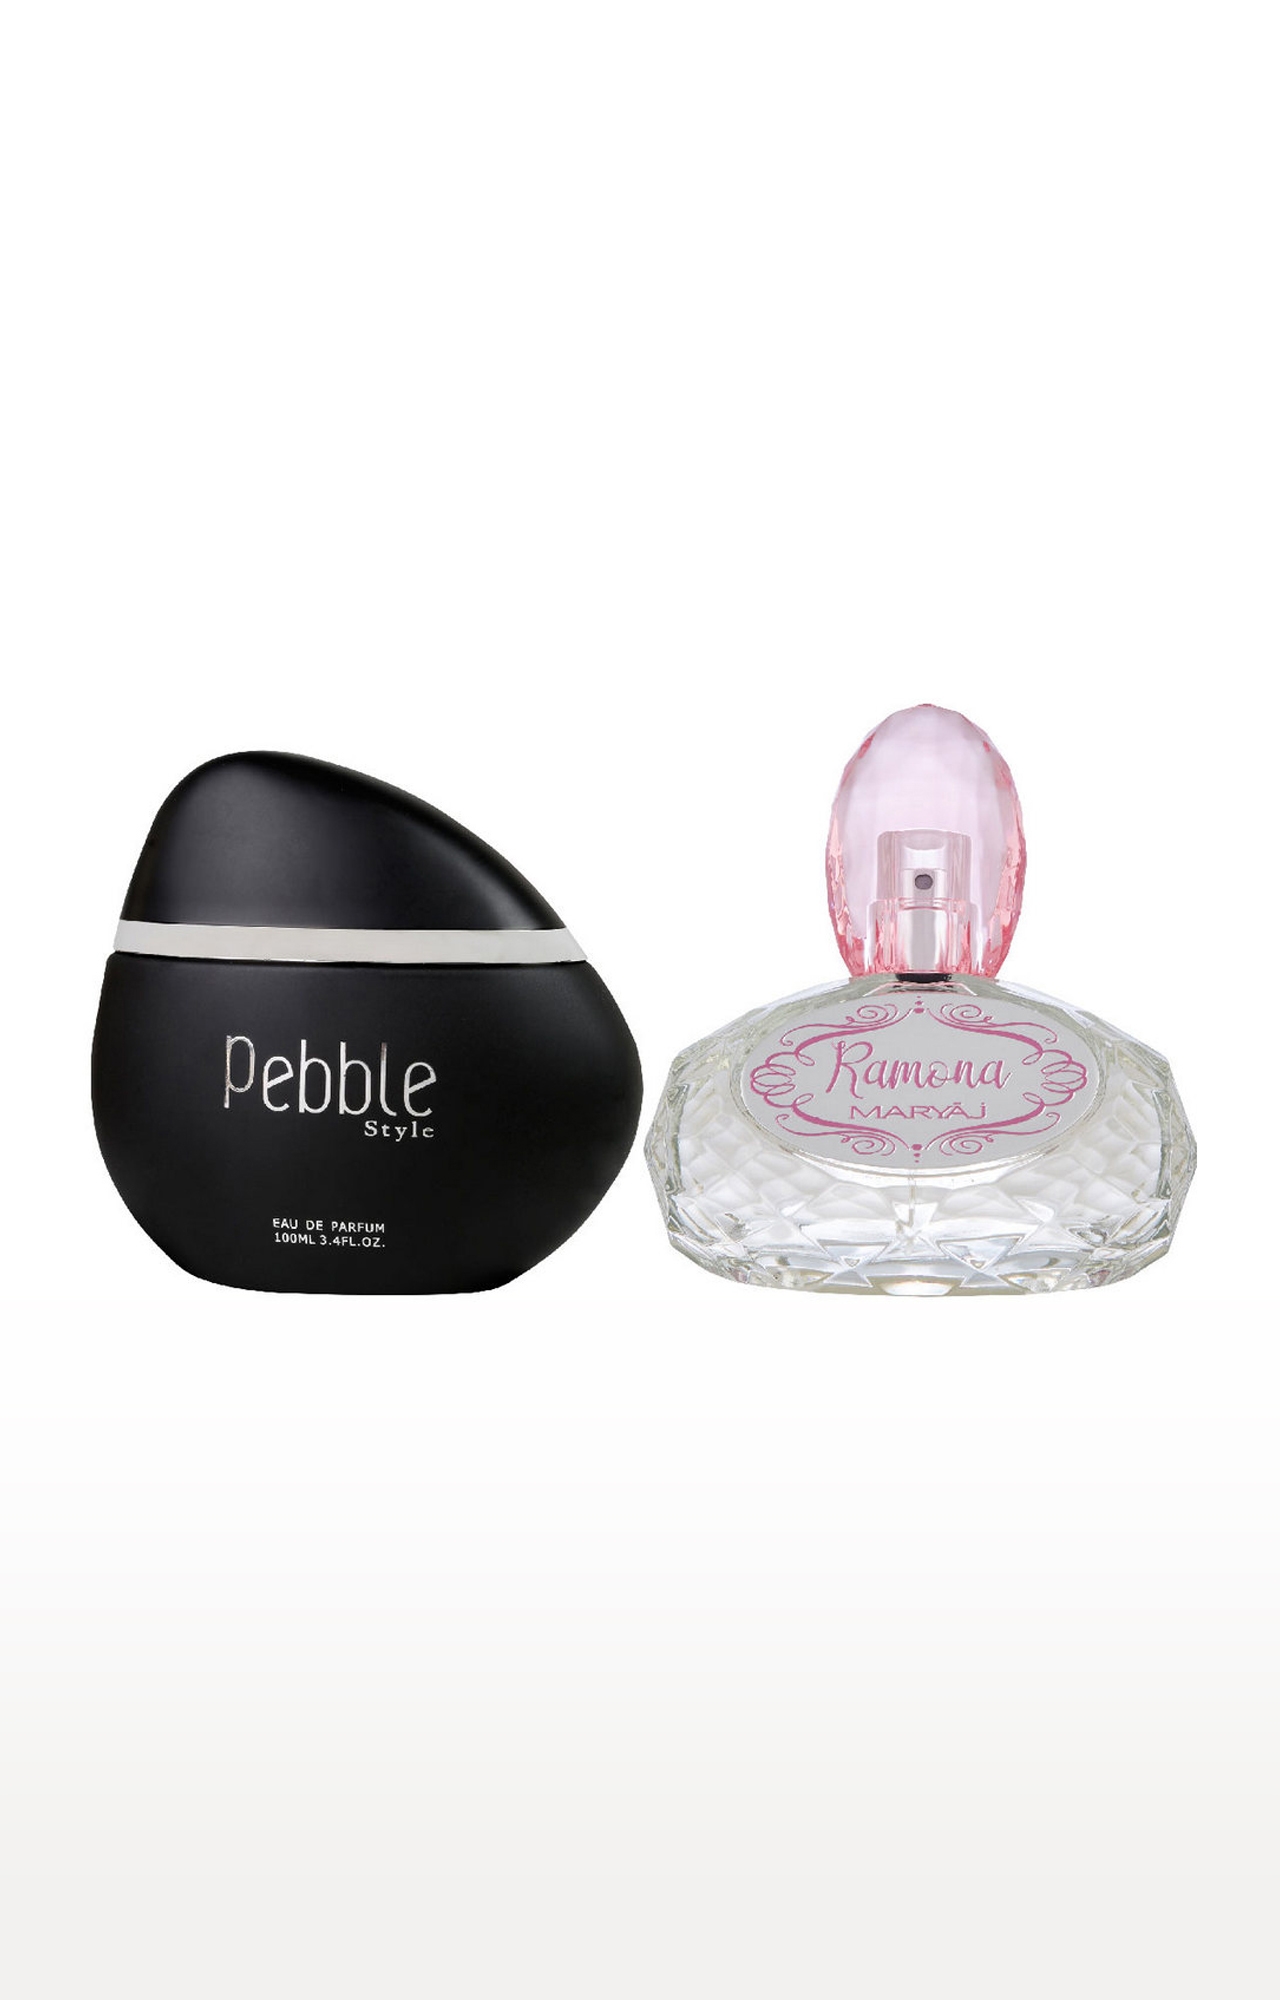 Maryaj Pebble Style Eau De Parfum Perfume 100ml for Men and Maryaj Ramona Eau De Parfum Perfume 100ml for Women